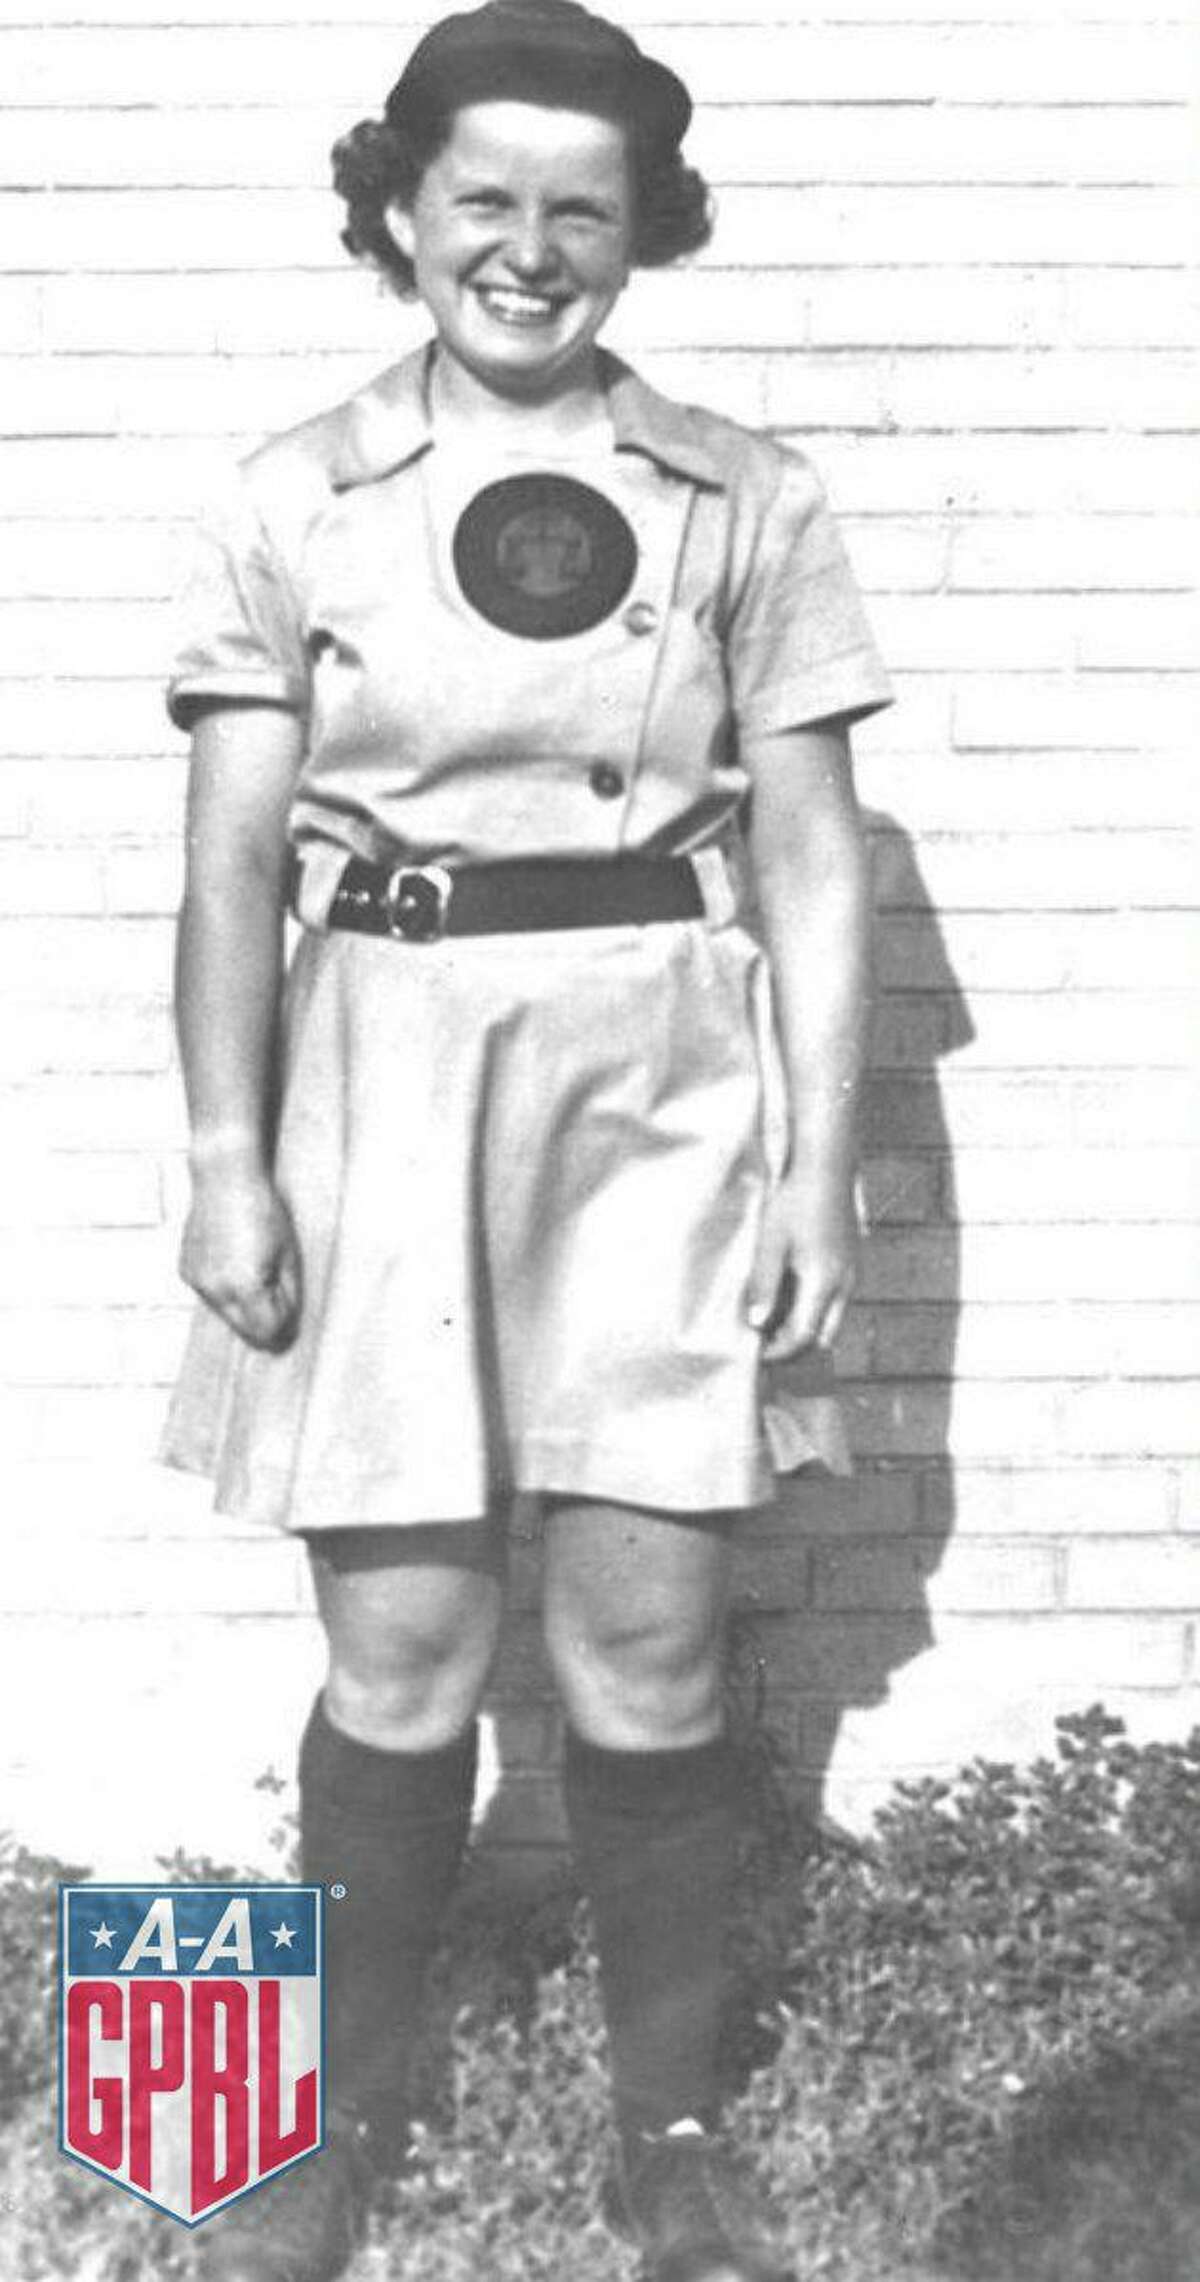 Pitcher Mary Pratt, last surviving member of Rockford Peaches, dies